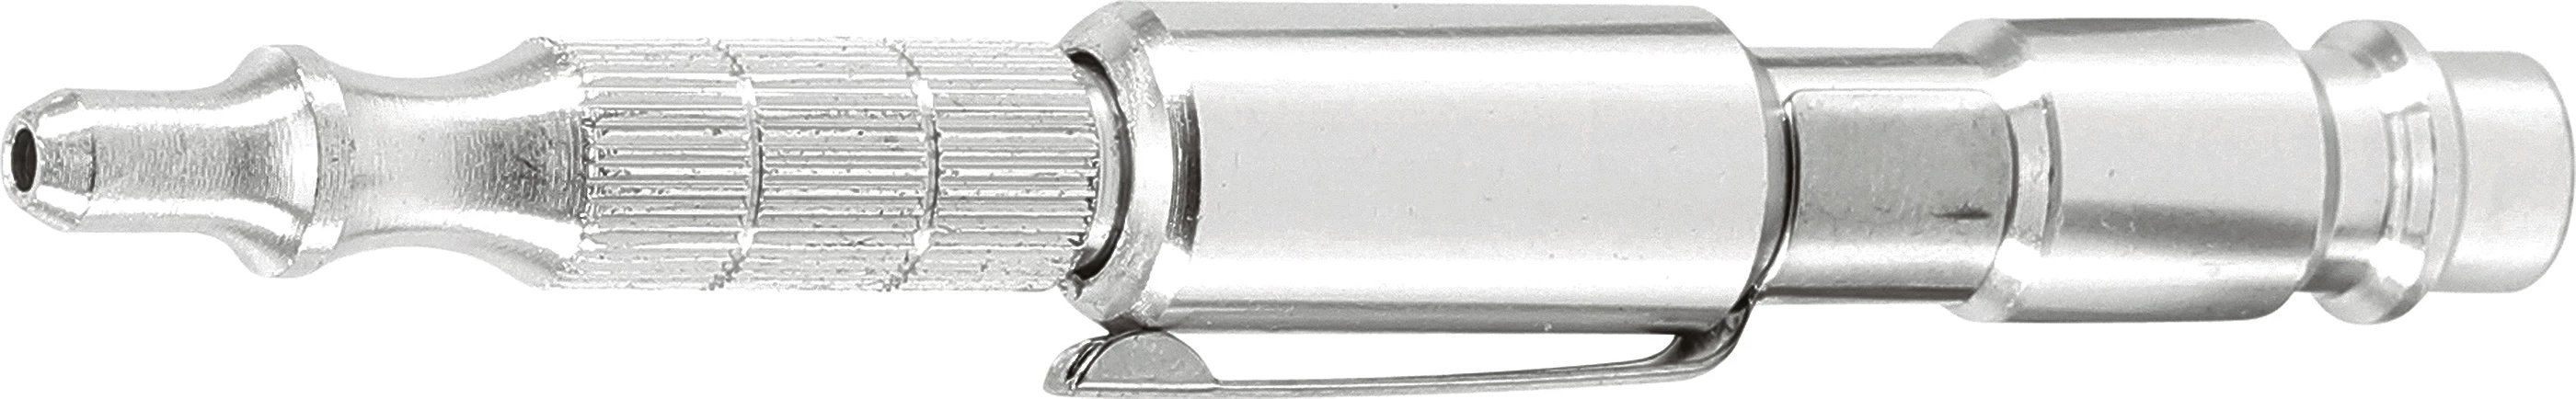 Druckluft-Ausblasstift - Alu-Ausführung - 110 mm